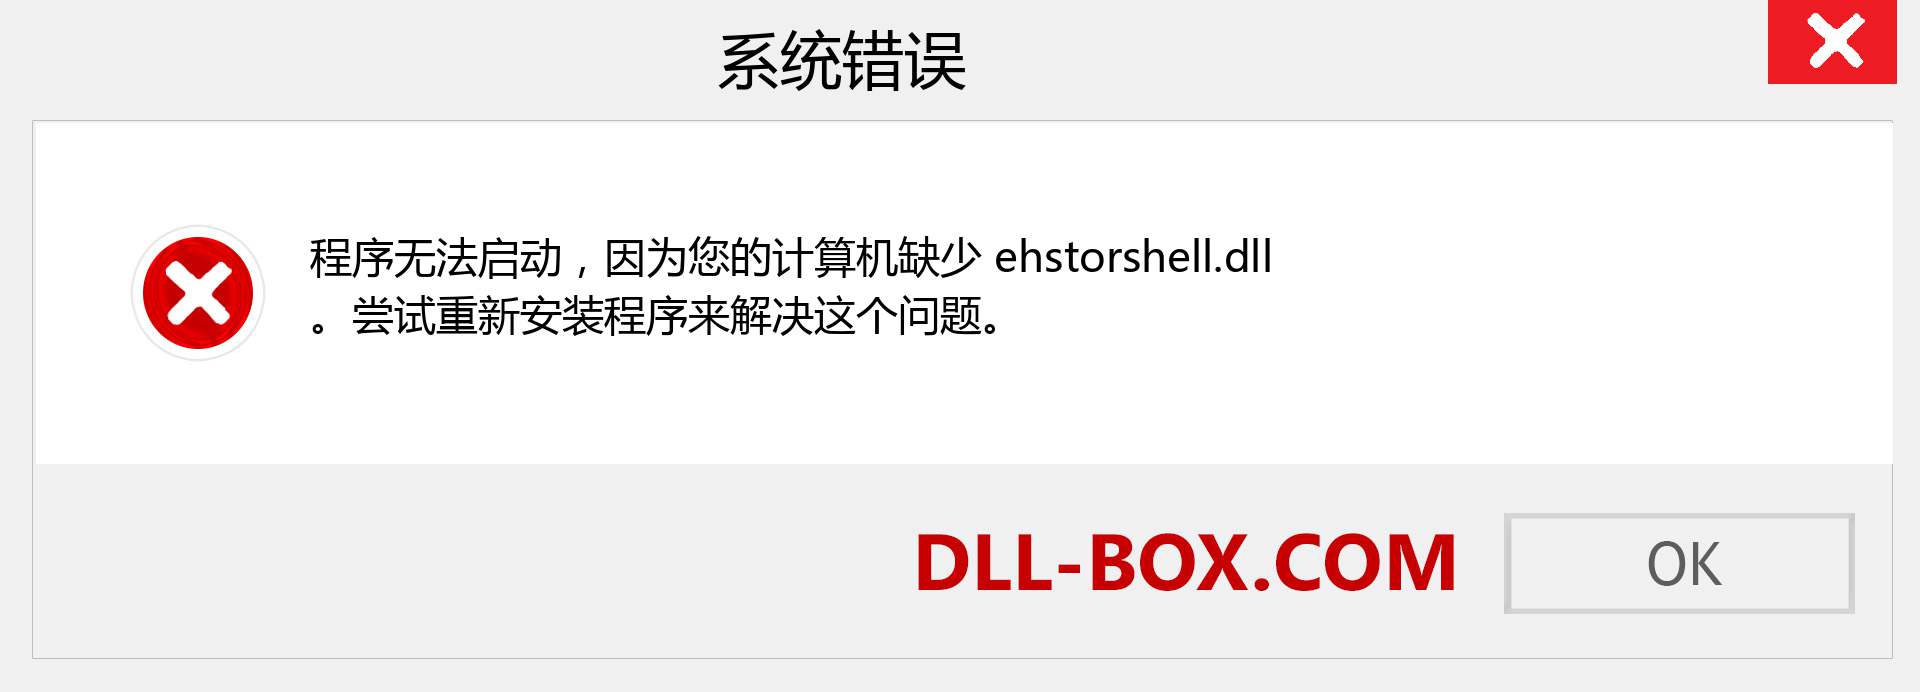 ehstorshell.dll 文件丢失？。 适用于 Windows 7、8、10 的下载 - 修复 Windows、照片、图像上的 ehstorshell dll 丢失错误